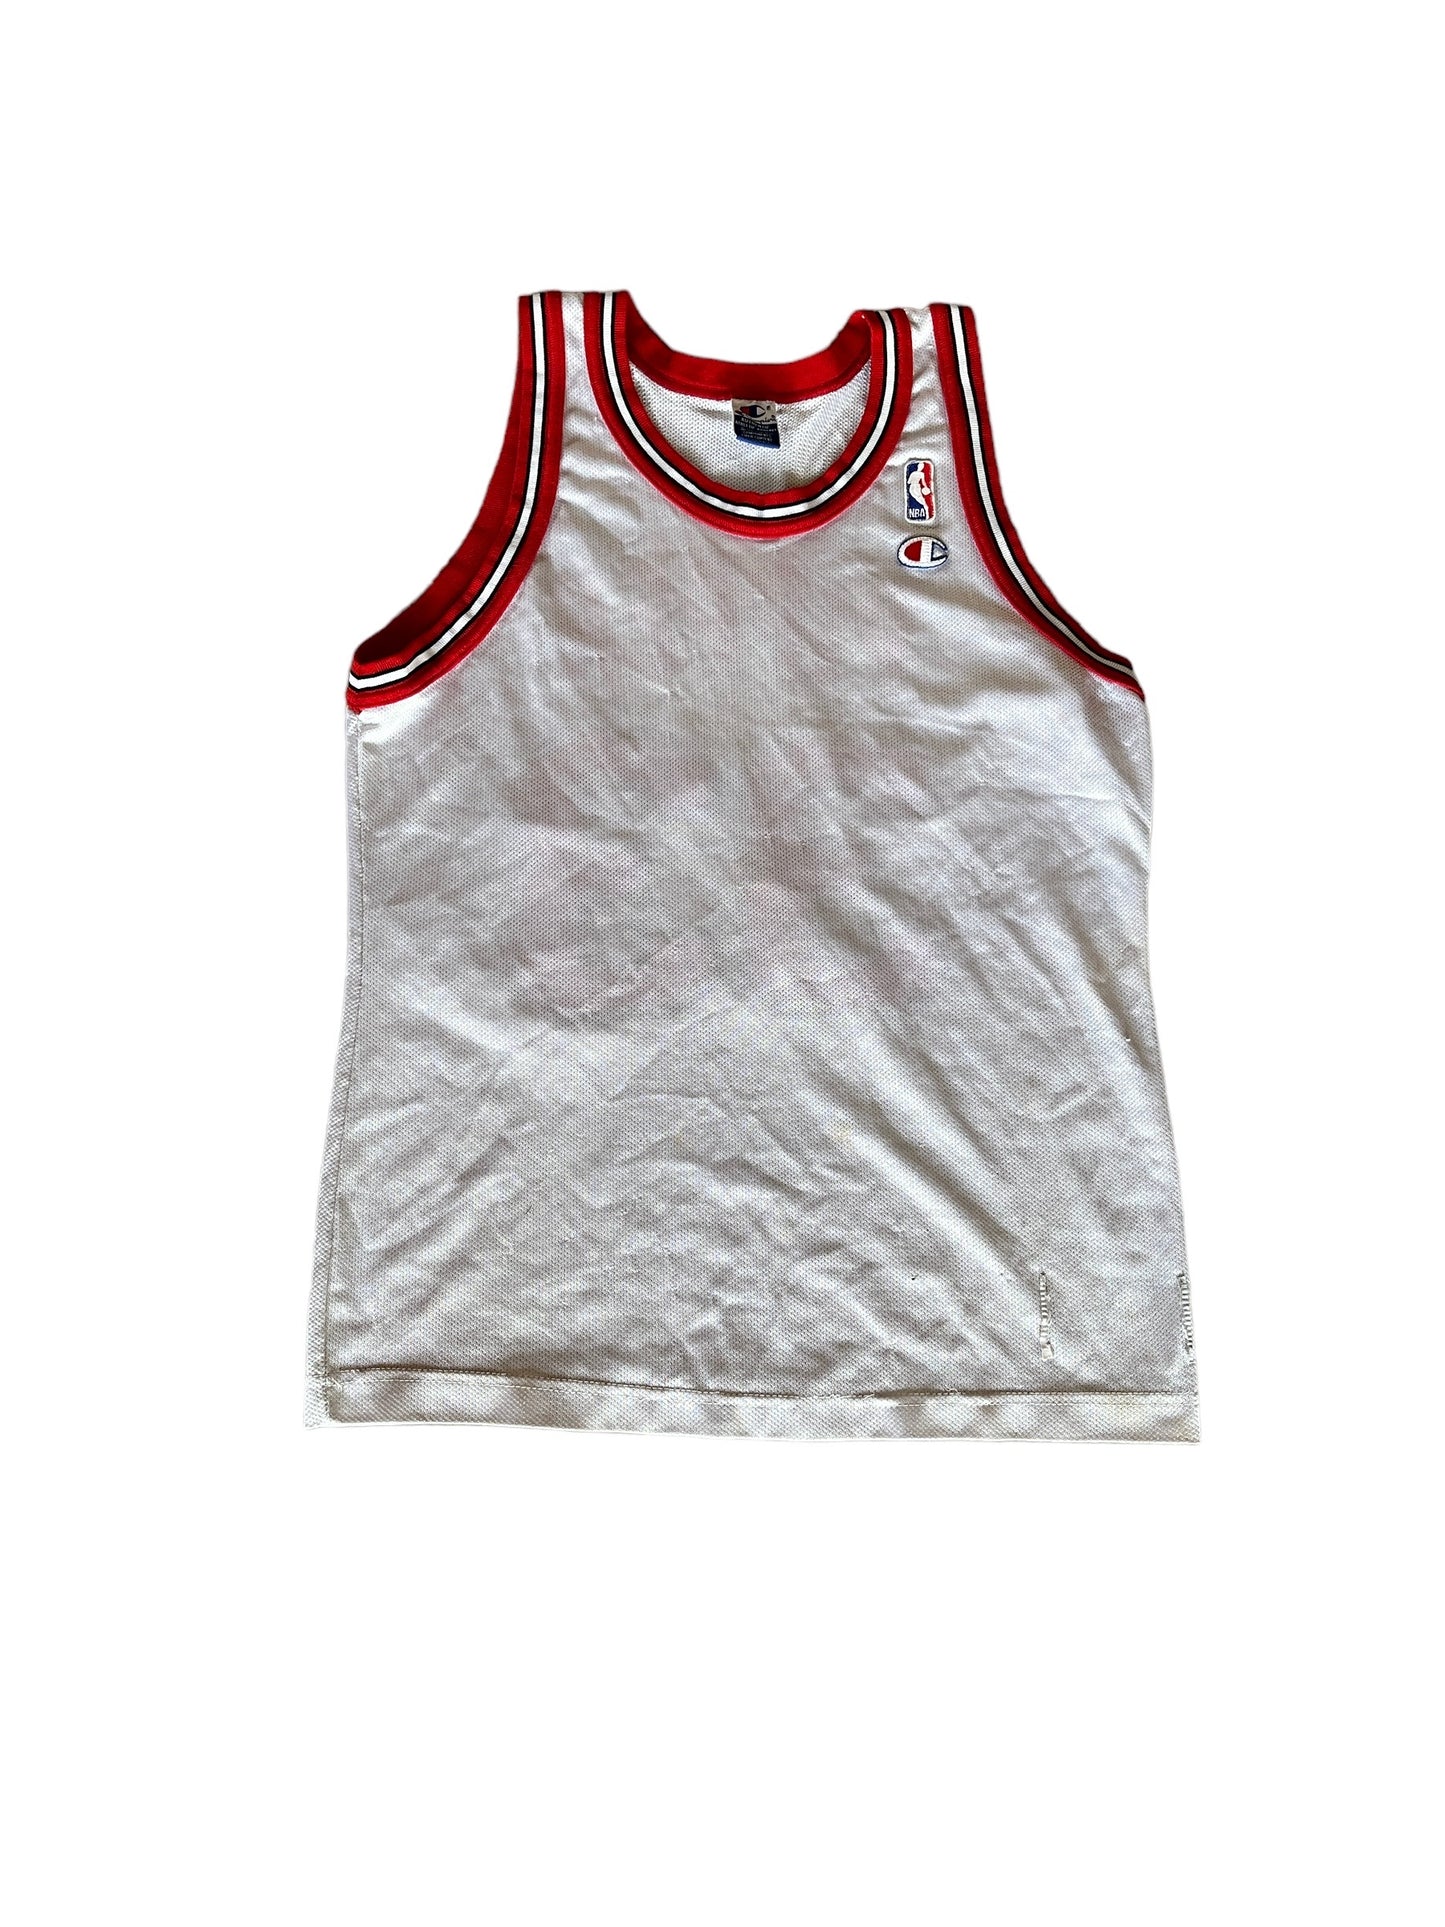 Vintage Champion "Scottie Pippen" Bulls Jersey